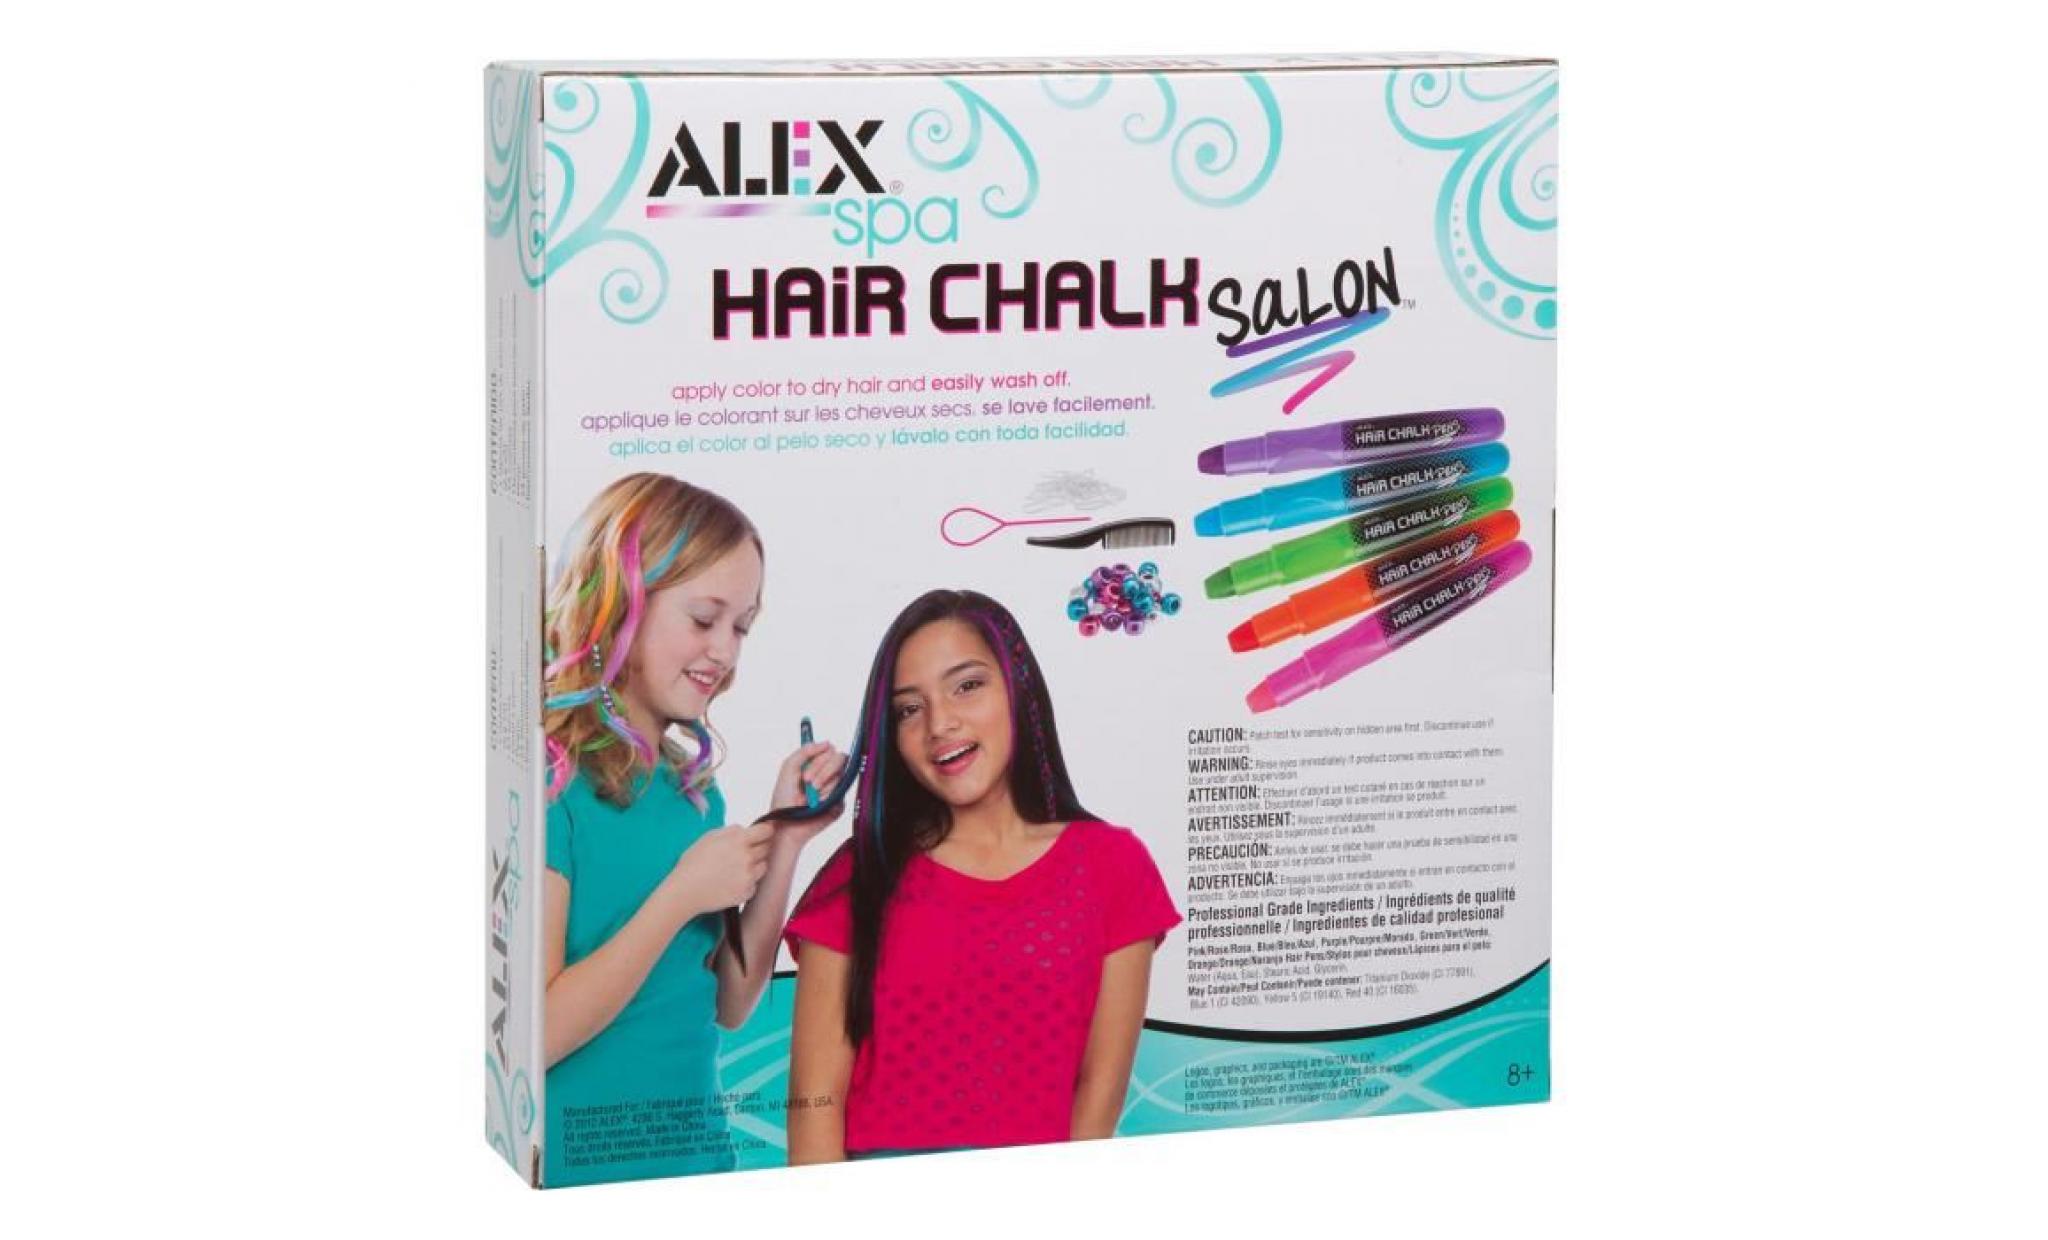 salon kit craft chalk spa hair 1w5r6i pas cher